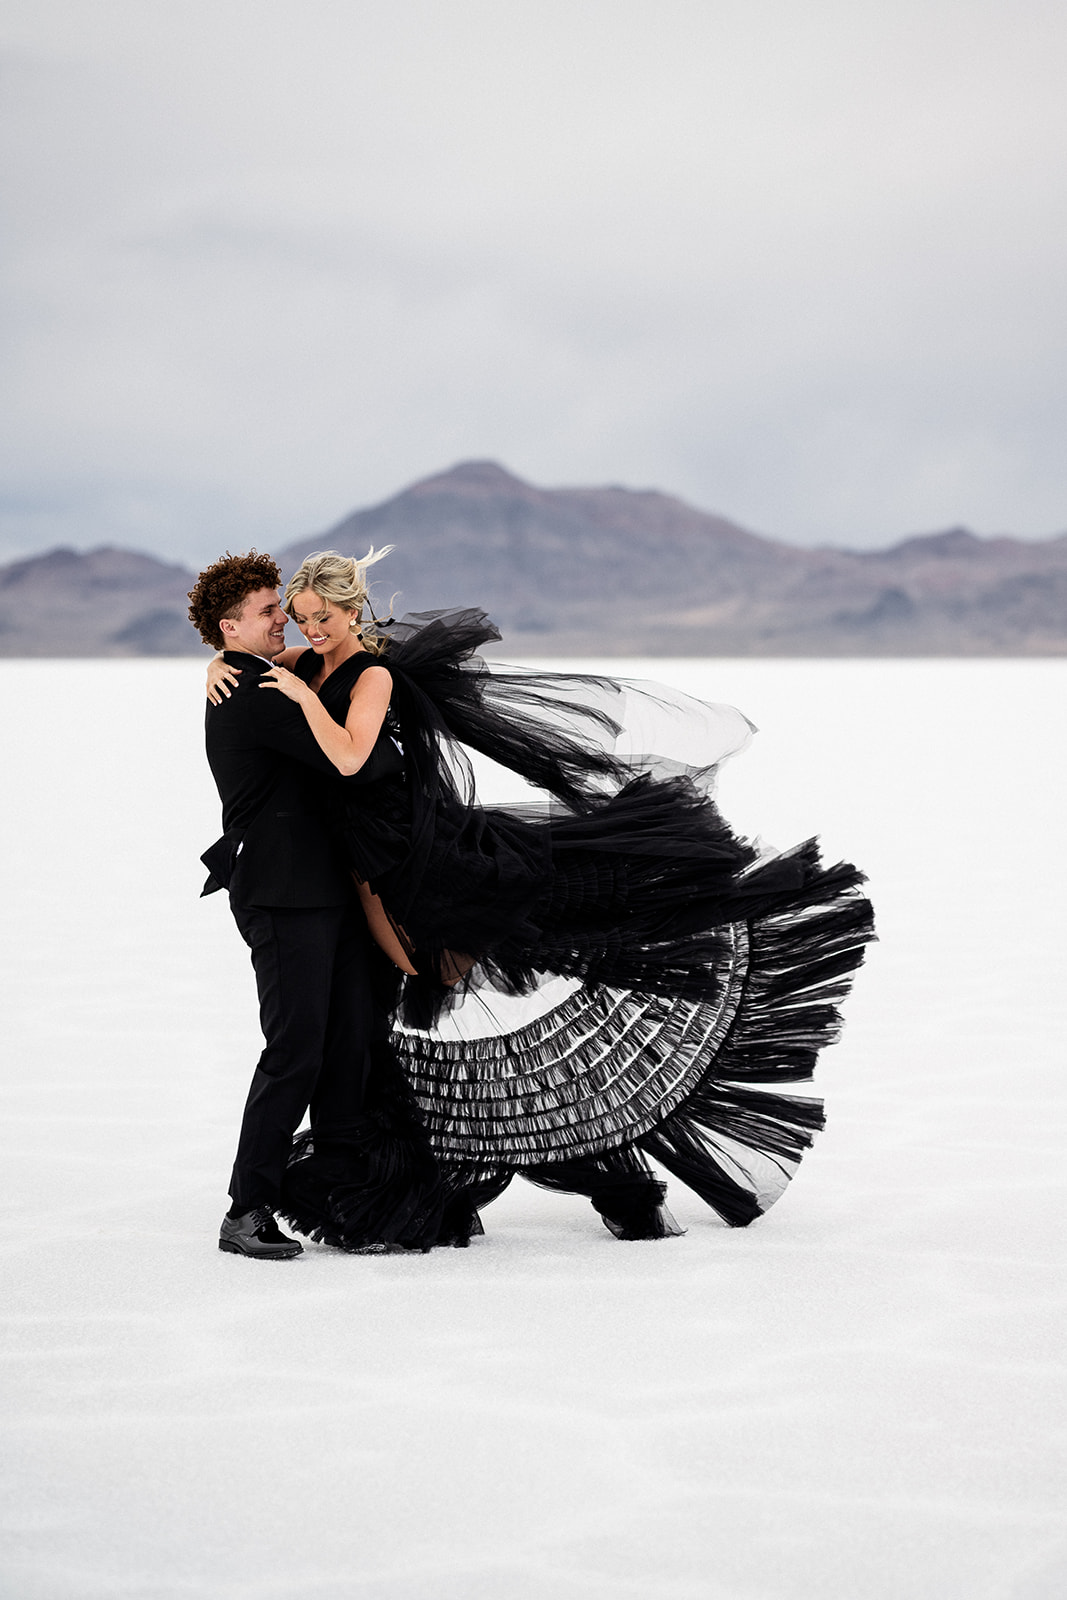 Utah Salt Flats wedding shoot capturing couple’s playful spin in a black tux and black dress